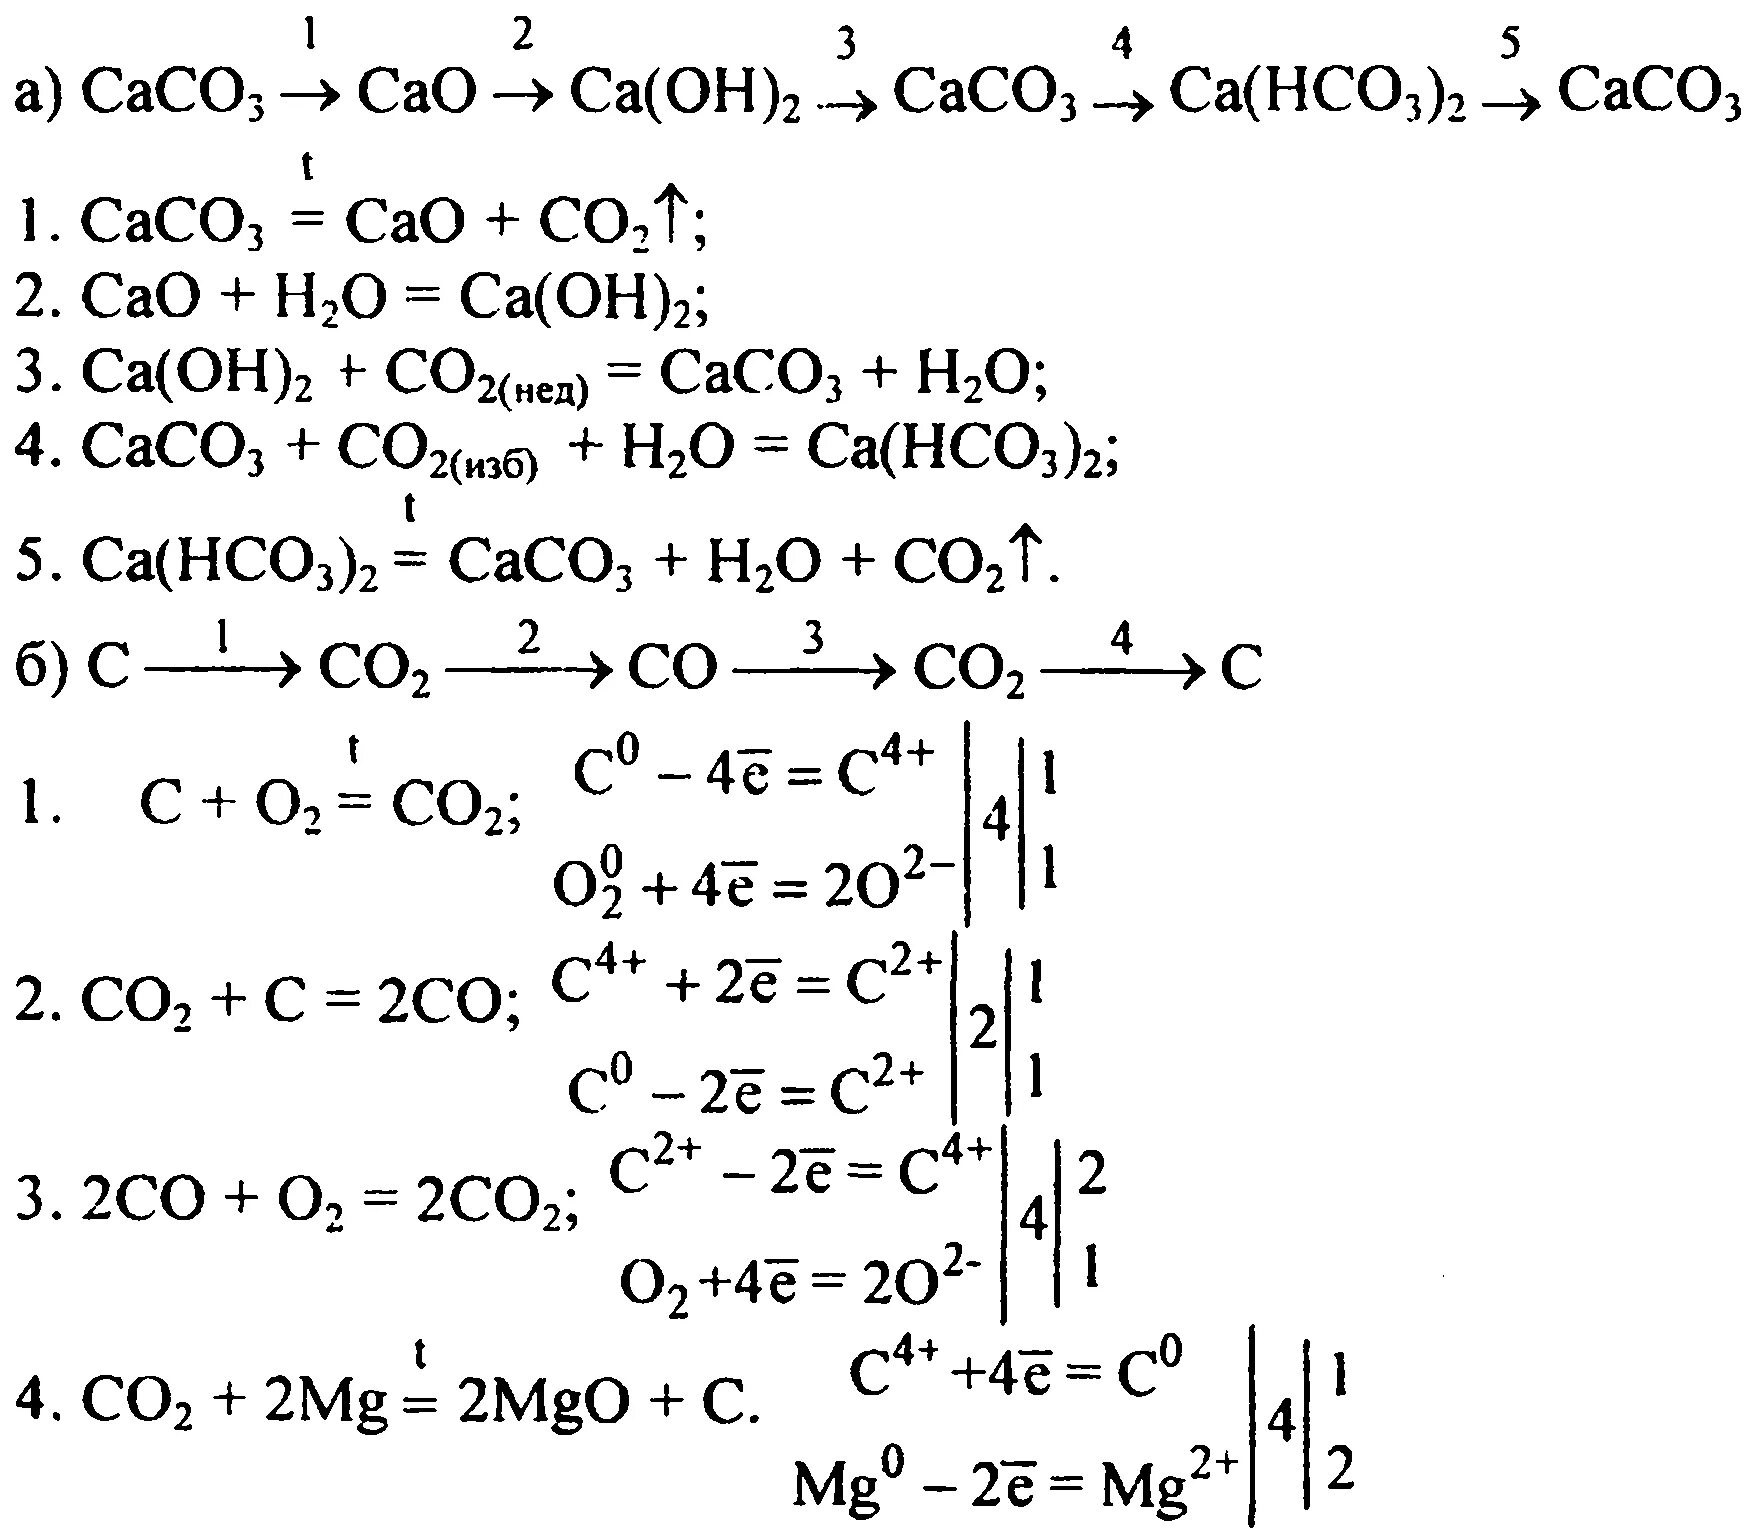 Кальций тест 9 класс. Углерод Цепочки превращений 9 класс. Цепочка превращений по химии 9 класс. Цепочки превращений 9 класс химия. Цепочки превращений 9 класс химия углерод.